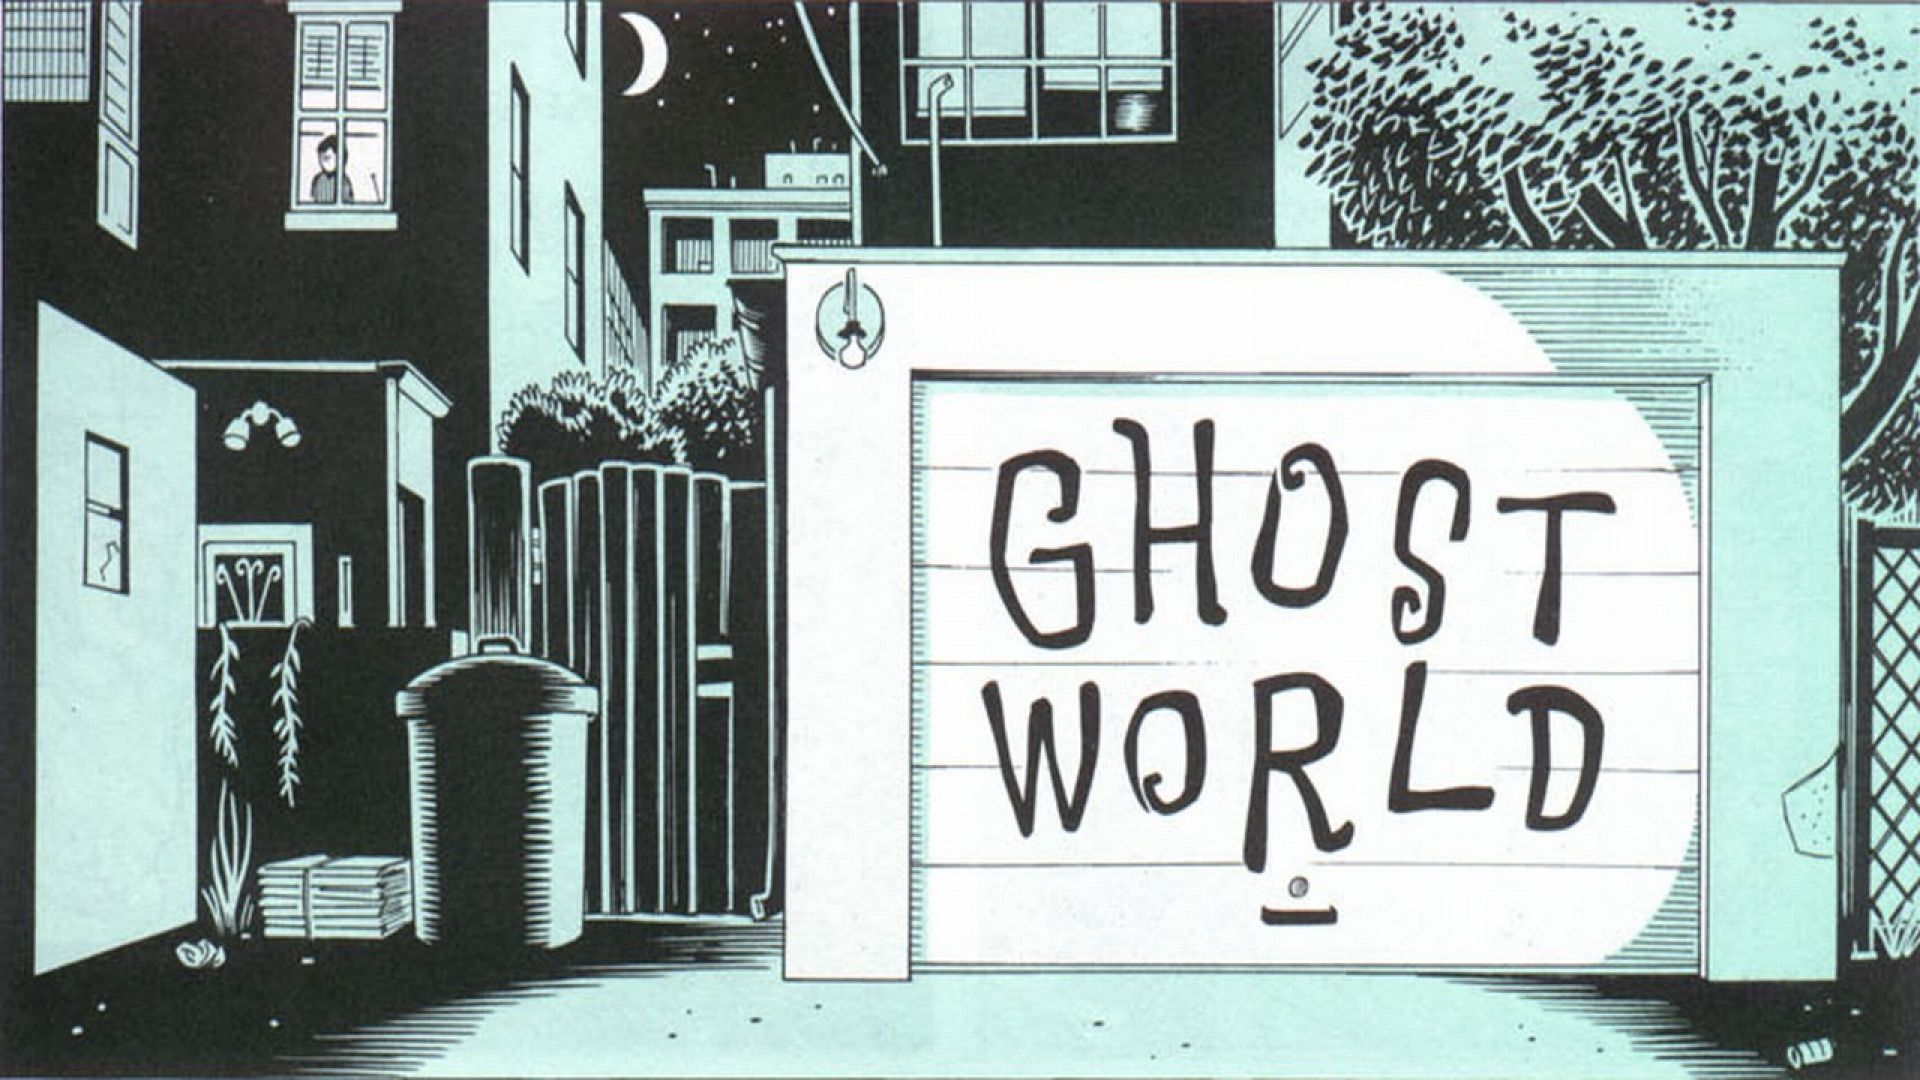 Daniel Clowe's graphic novel Ghost World.